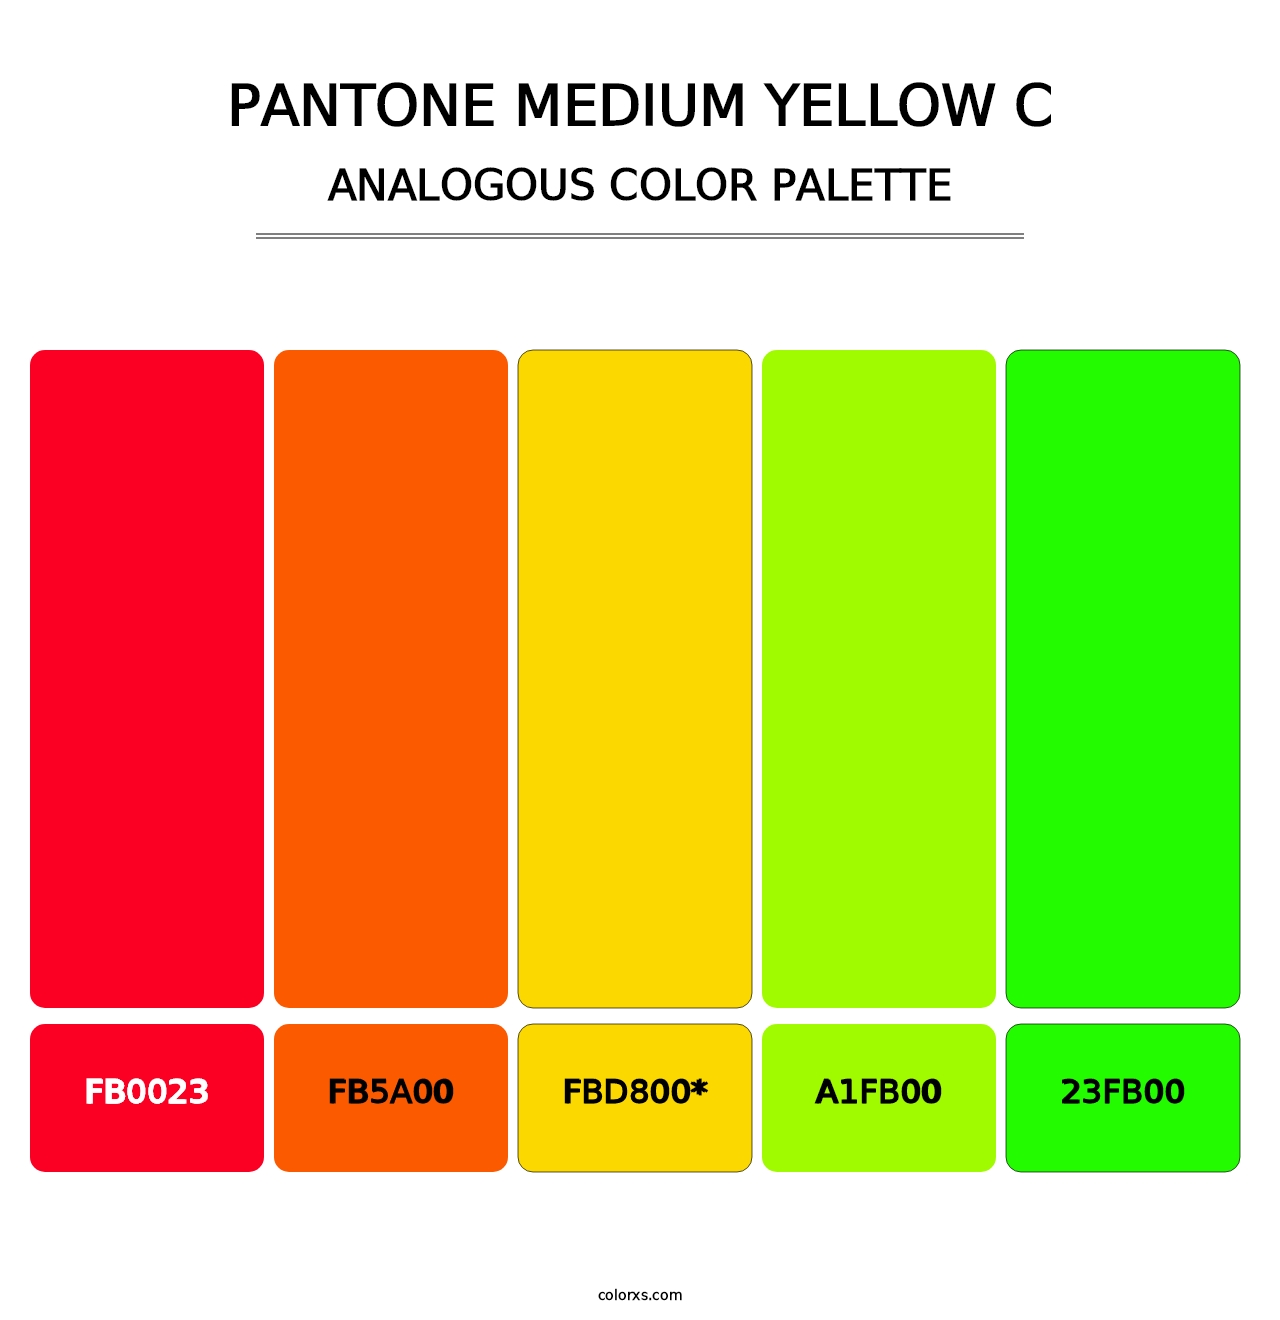 PANTONE Medium Yellow C - Analogous Color Palette